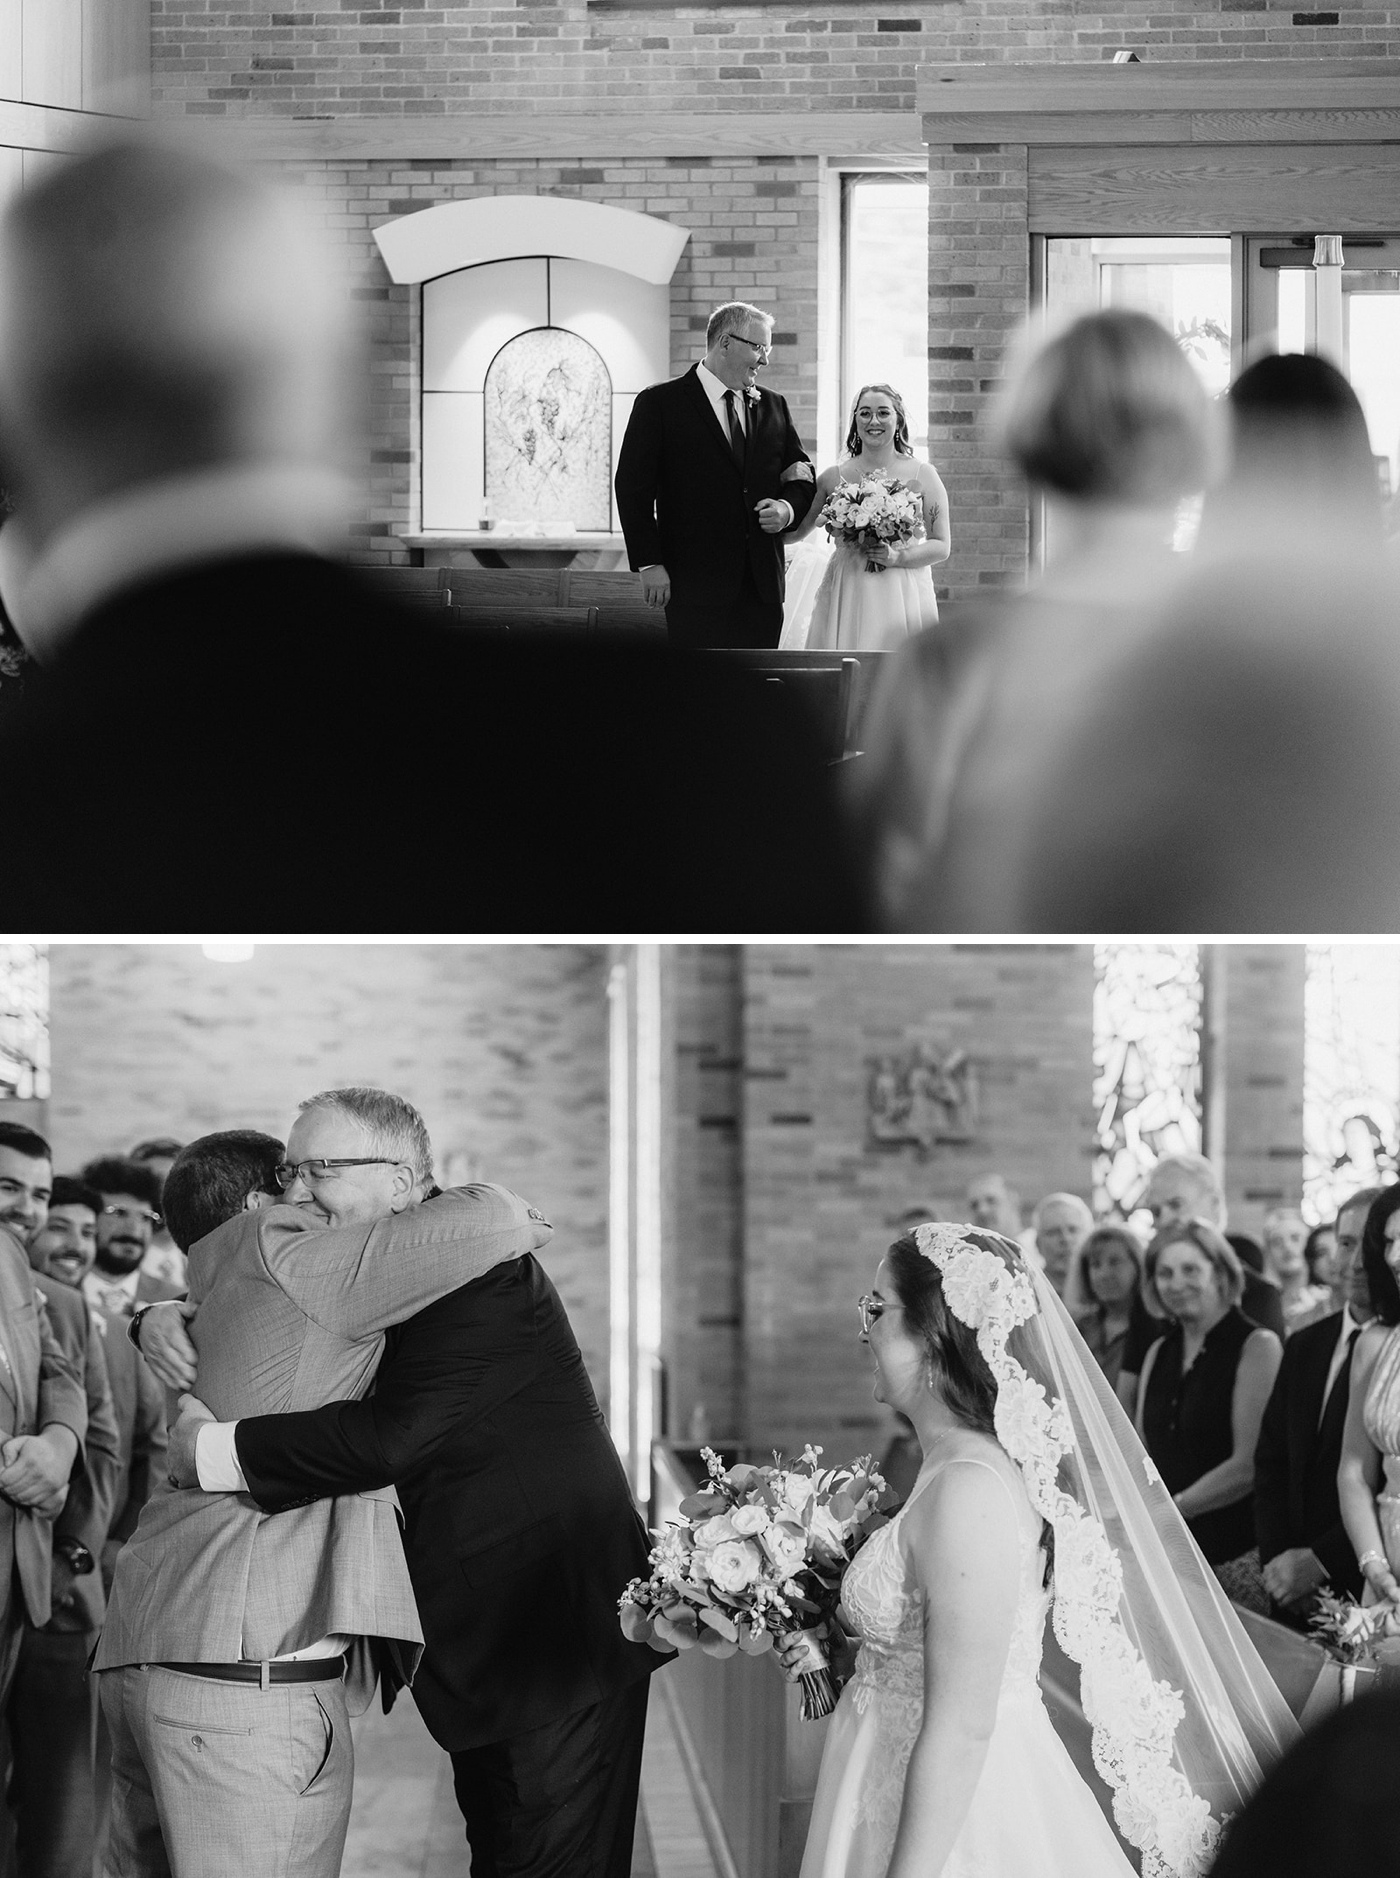 Wedding ceremony at St. Joseph's Church in Penfield, NY